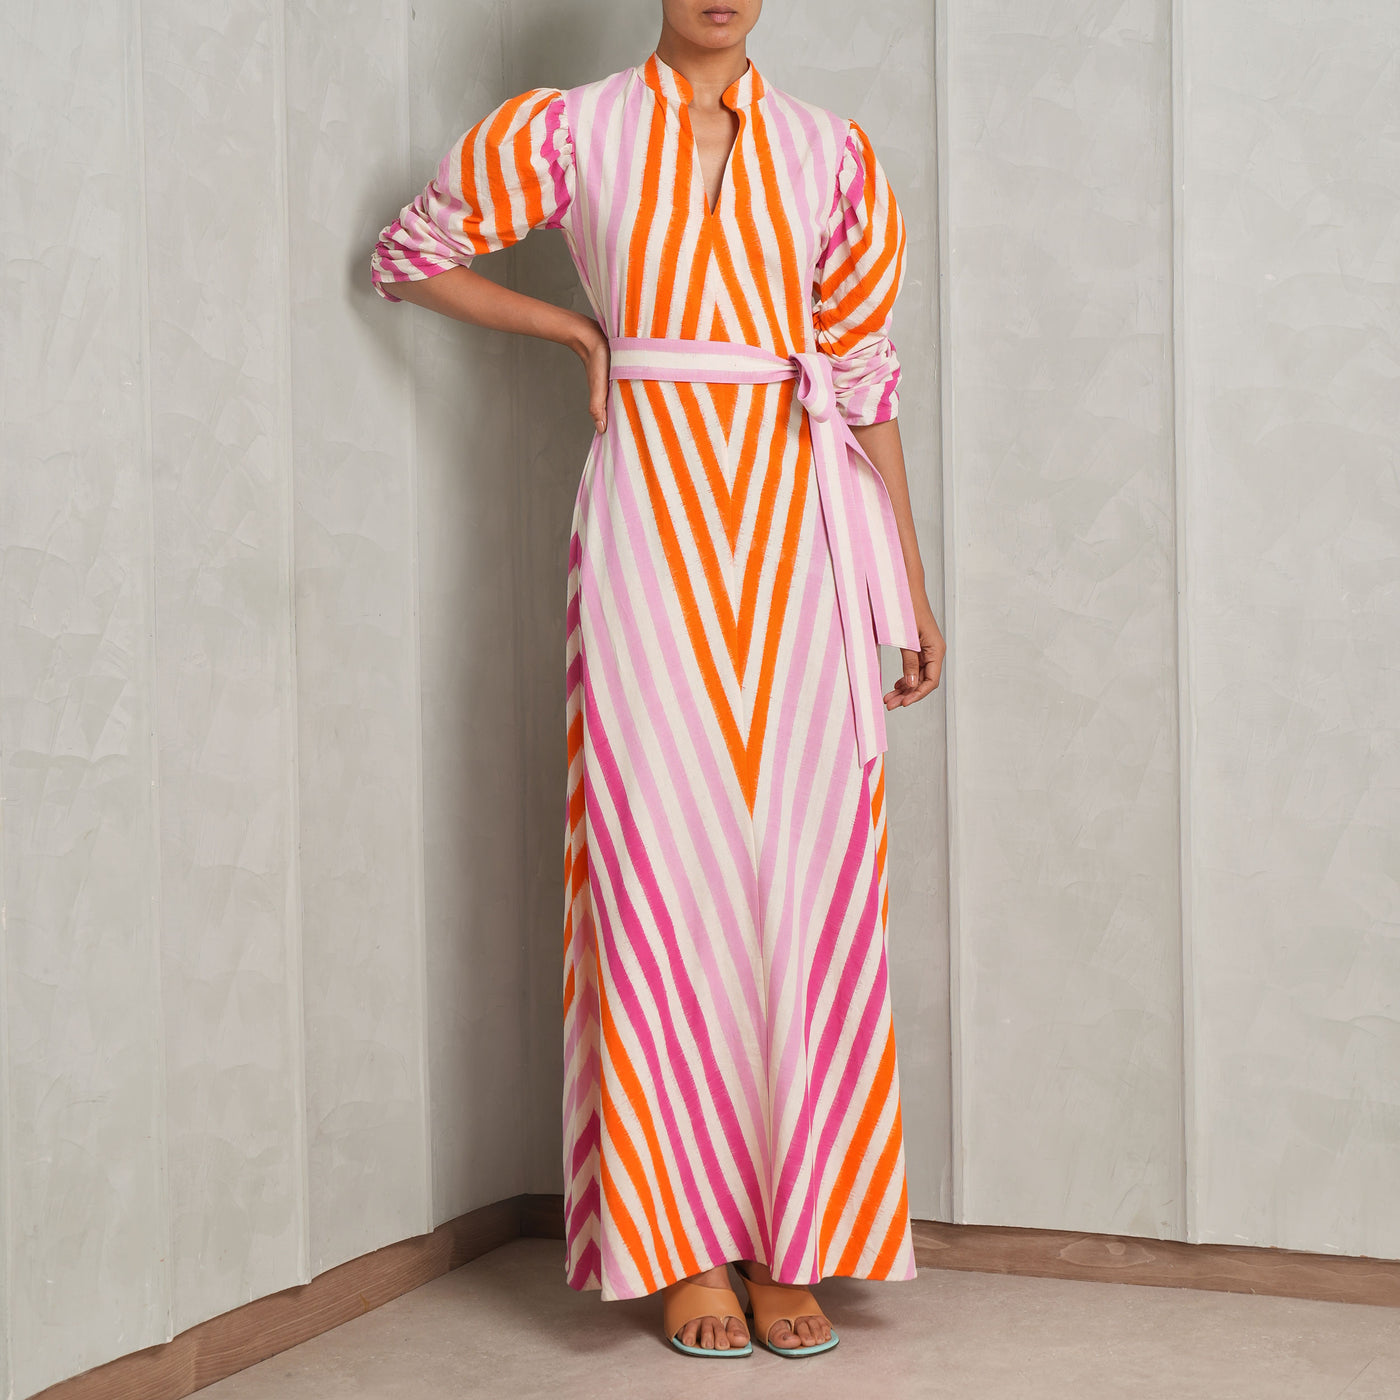 DE-CASTRO Illusion Maxi Dress Media pink orange white stripes